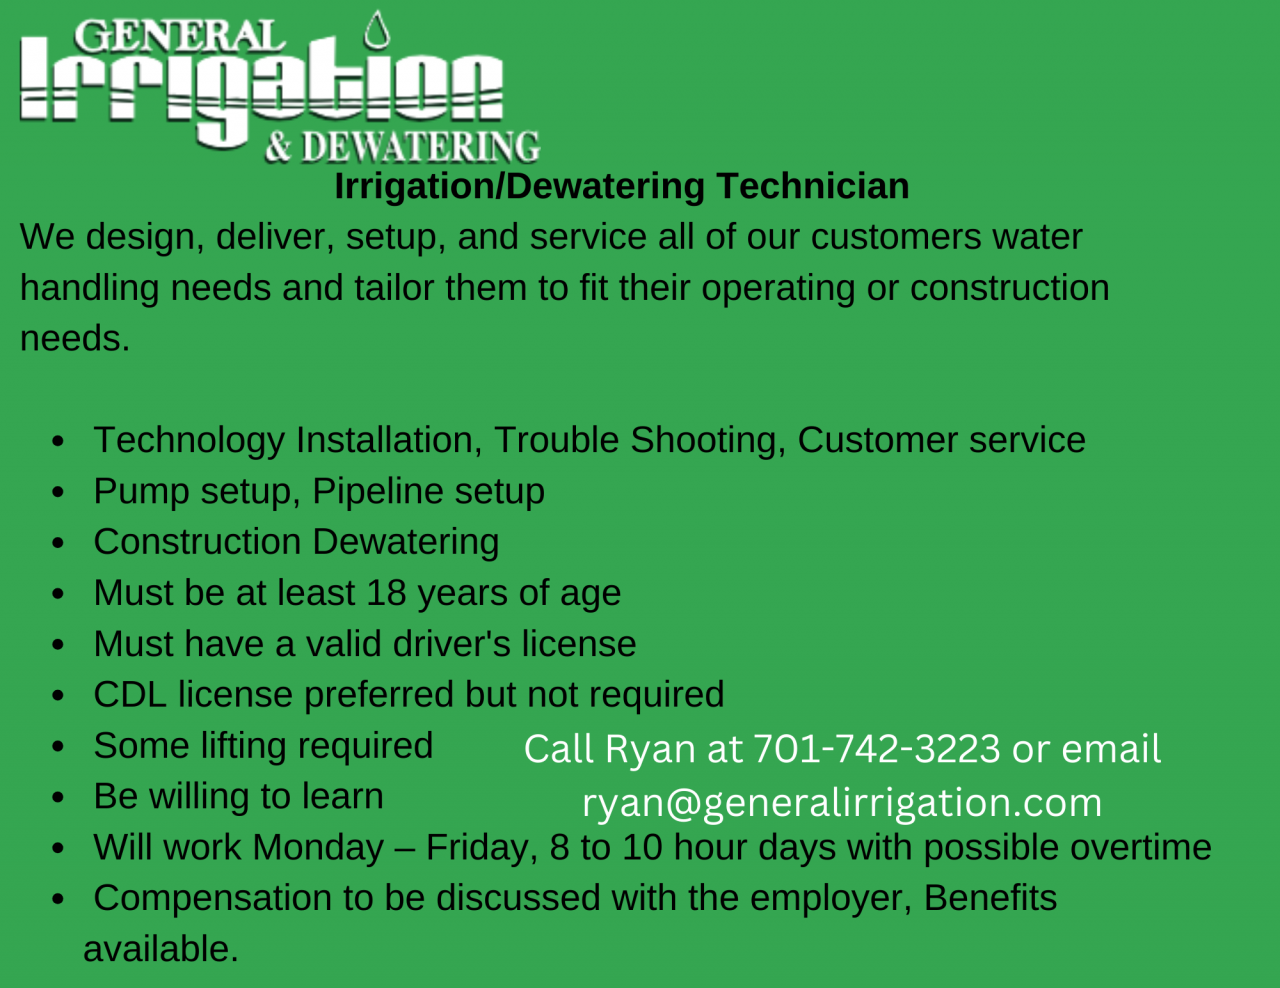 Irrigation/Dewatering Technician at General Irrigation & Dewatering 